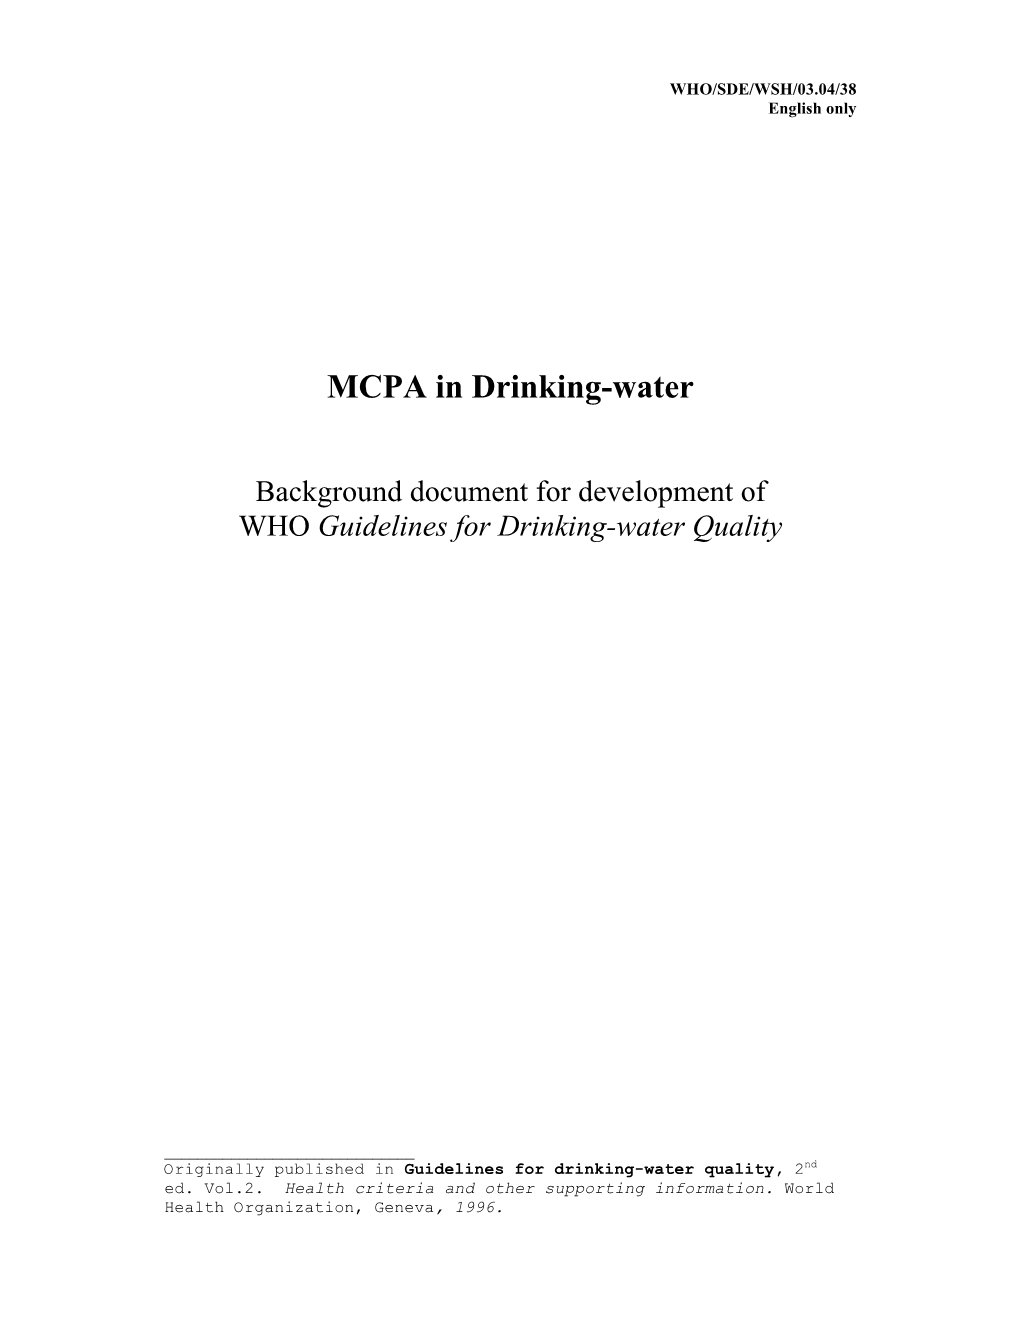 MCPA in Drinking-Water